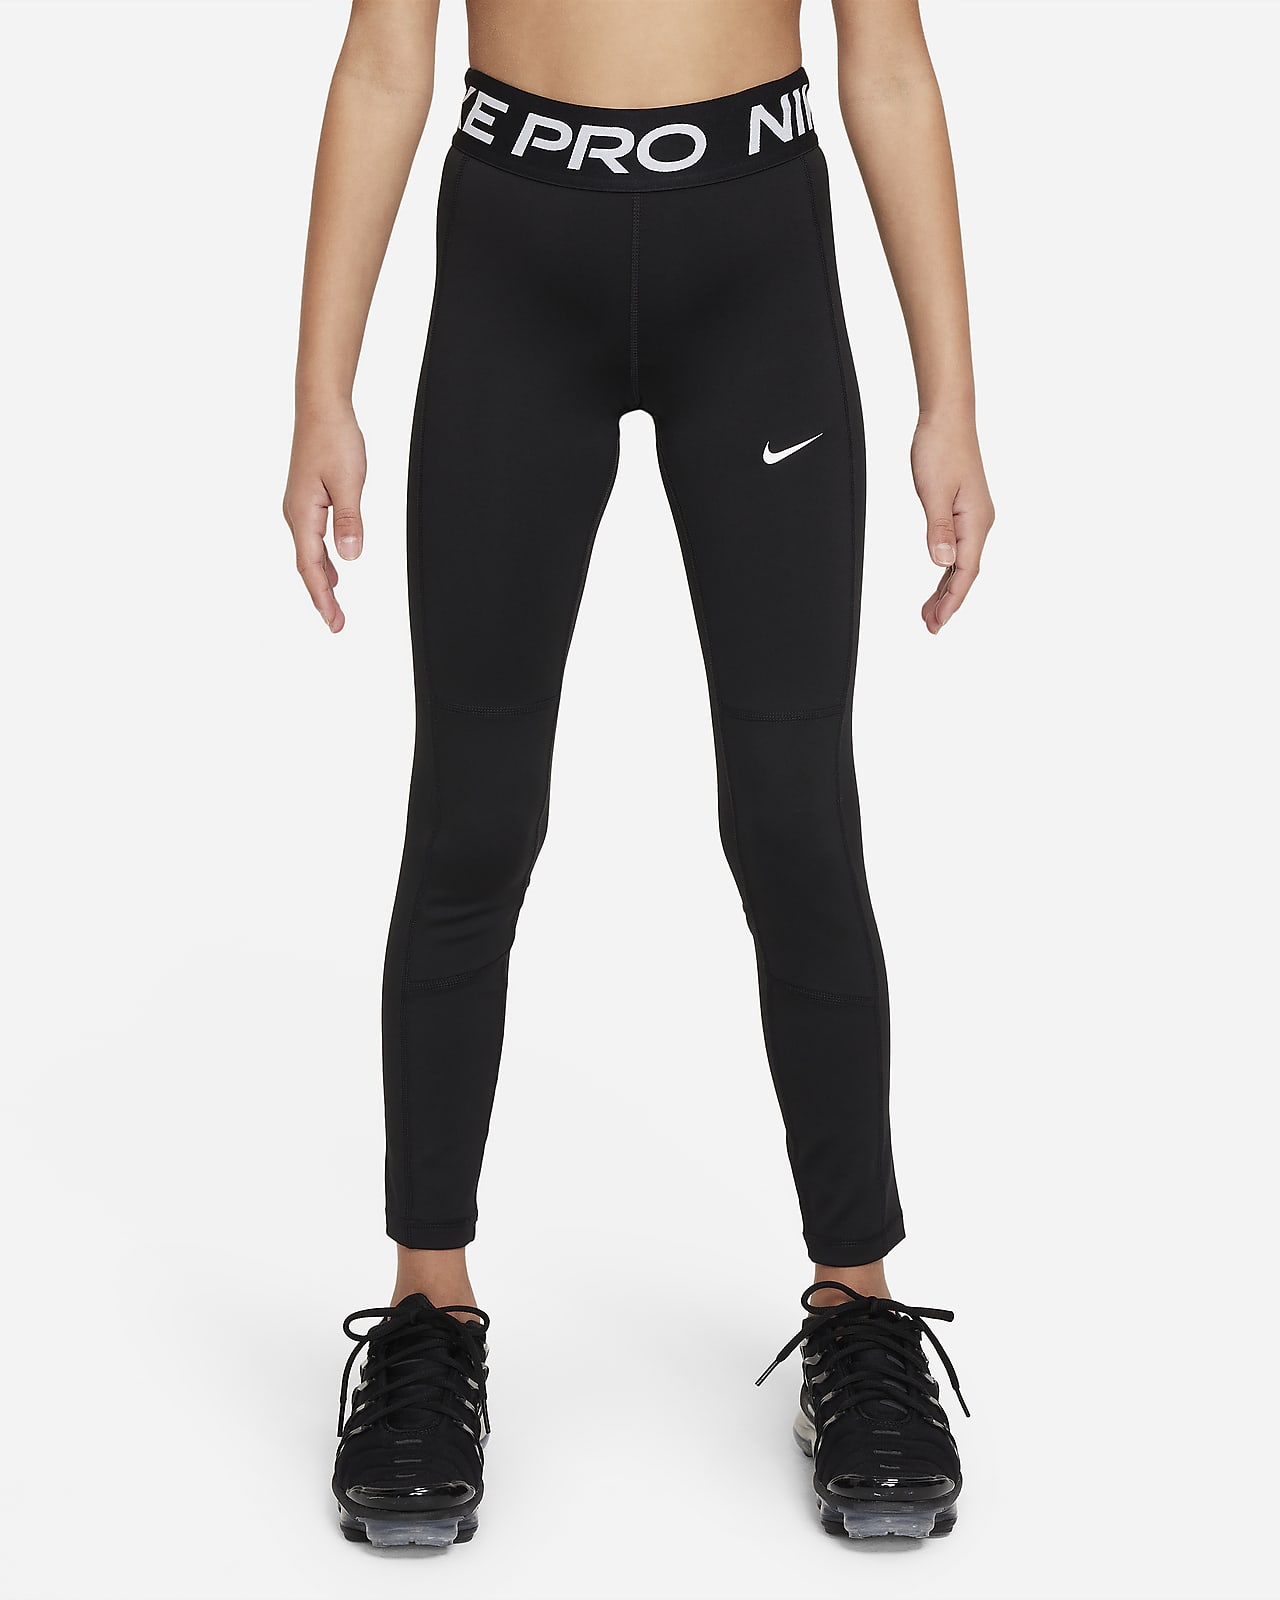 Nike Performance FEMME - Leggings - black/iron grey/white/(white